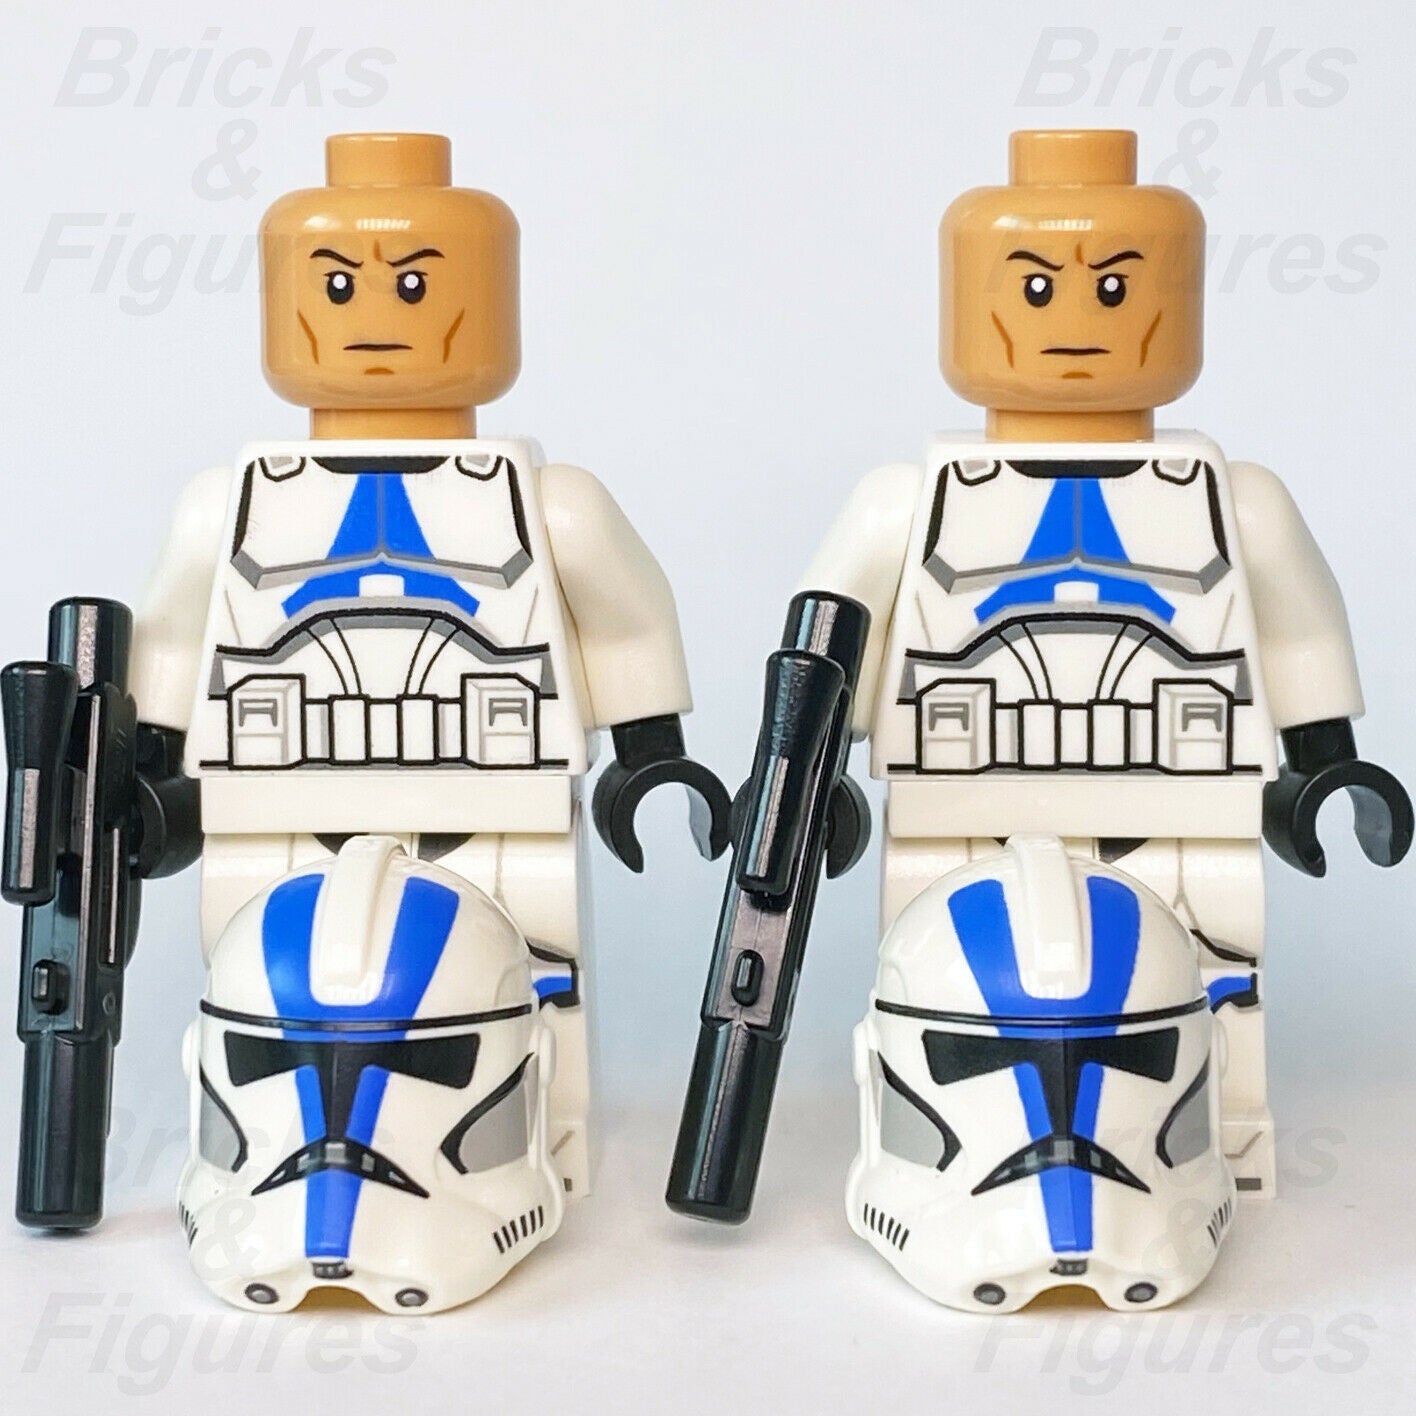 2 x New Star Wars LEGO 501st Legion Clone Trooper Episode 3 Minifigures 75280 1